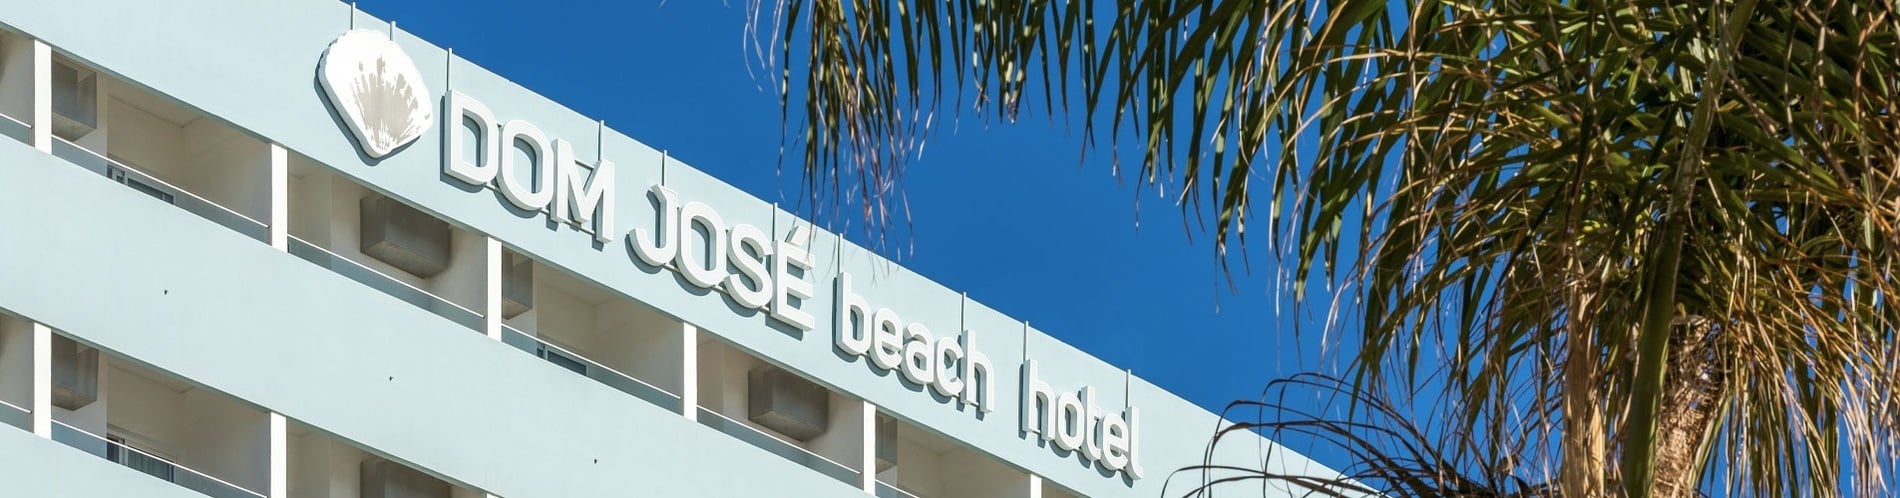 Dom Jose Beach Hotel